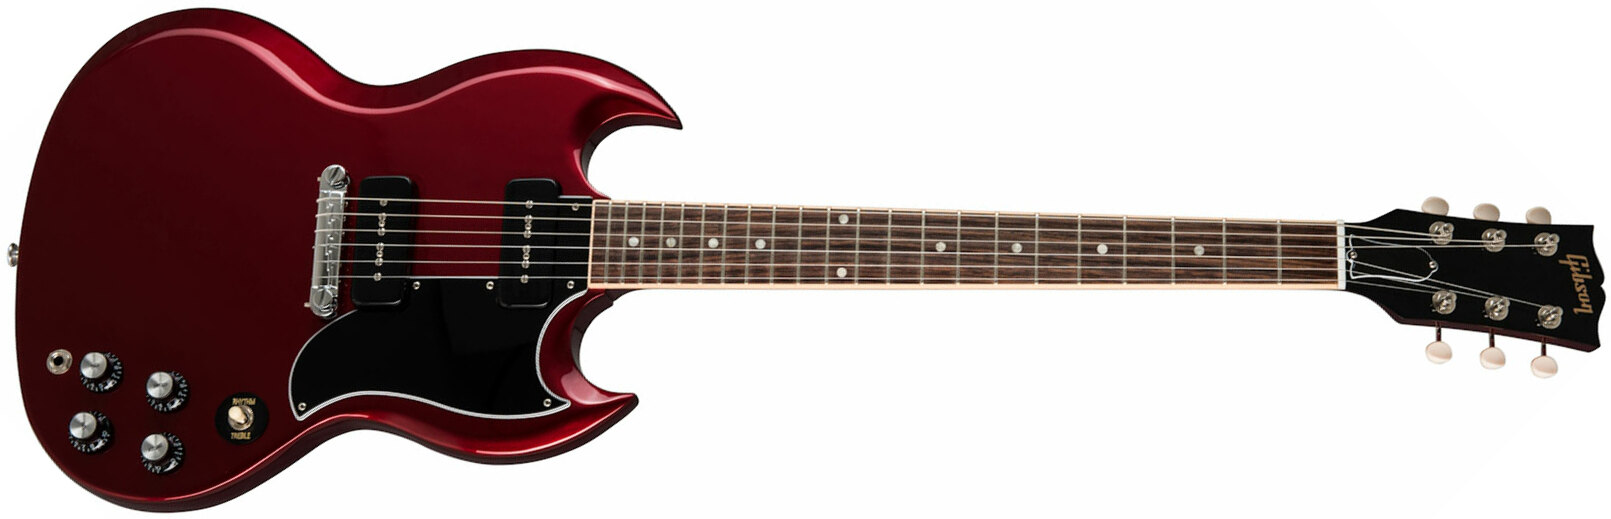 Gibson Sp Special Original 2p90 Ht Rw - Vintage Sparkling Burgundy - Guitarra electrica retro rock - Main picture